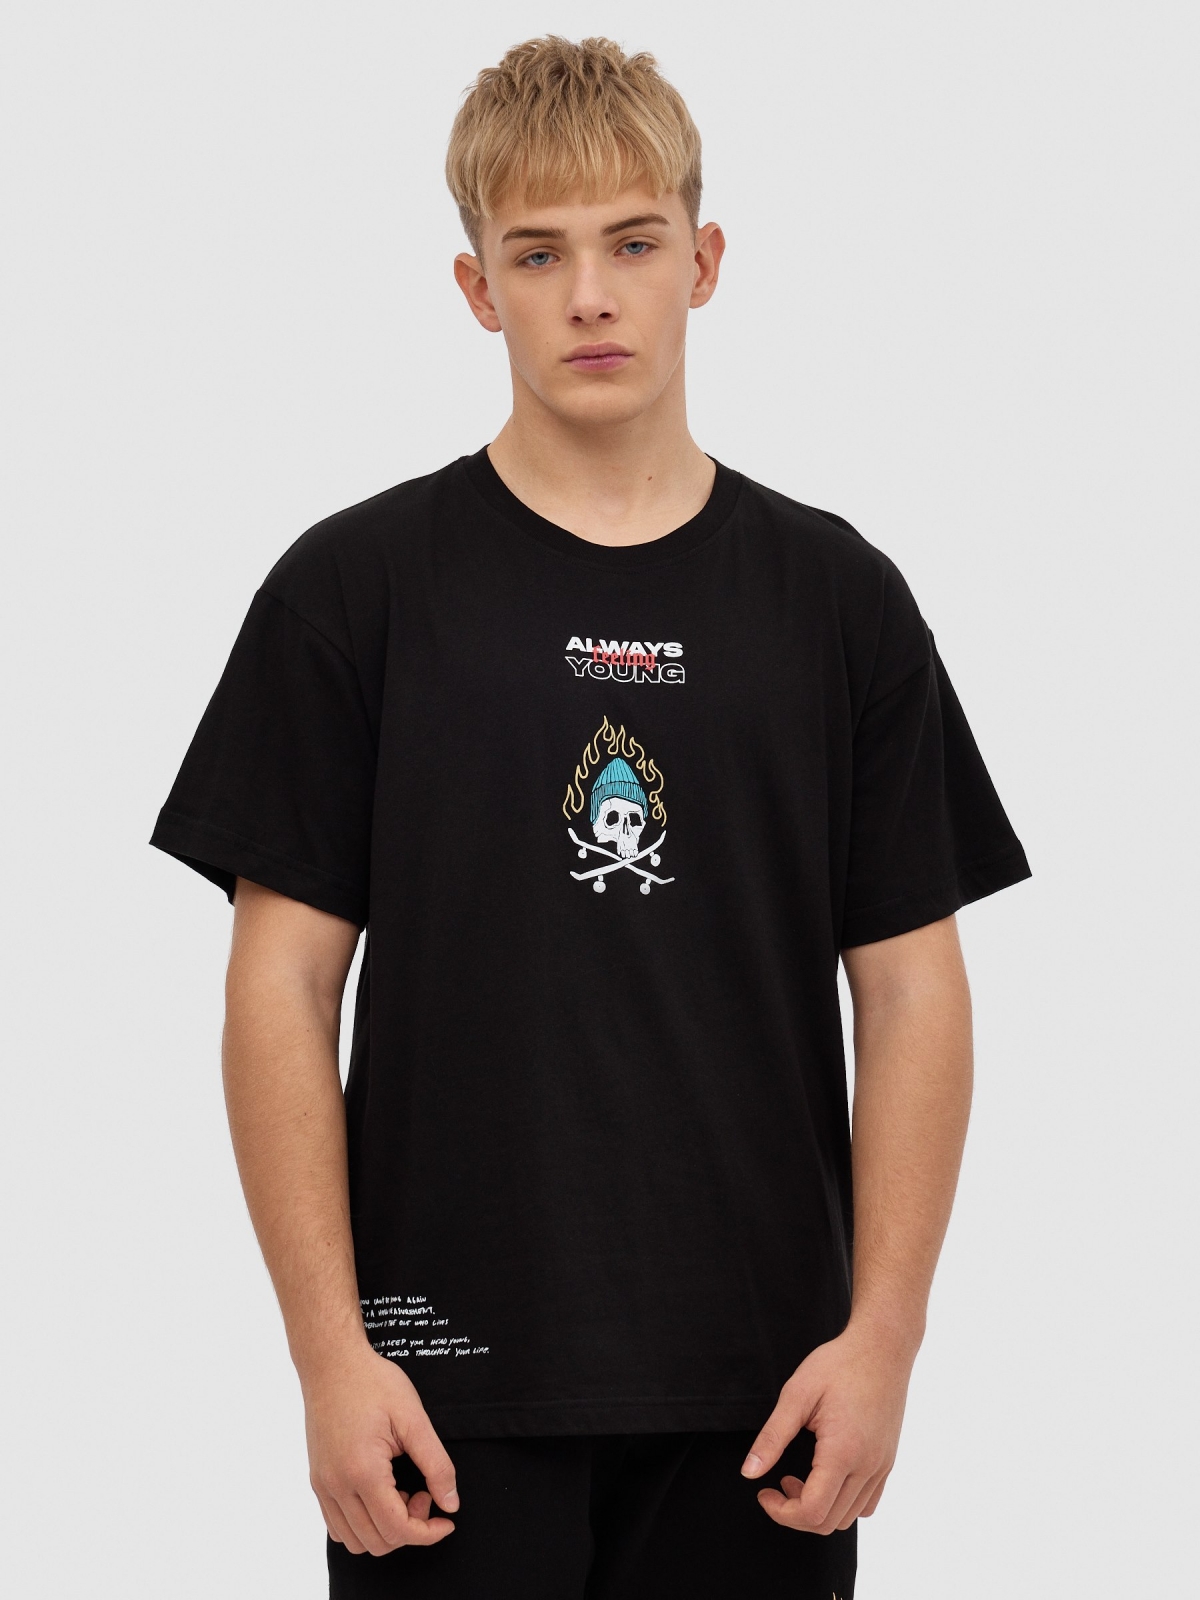 Camiseta calavera skater negro vista media frontal